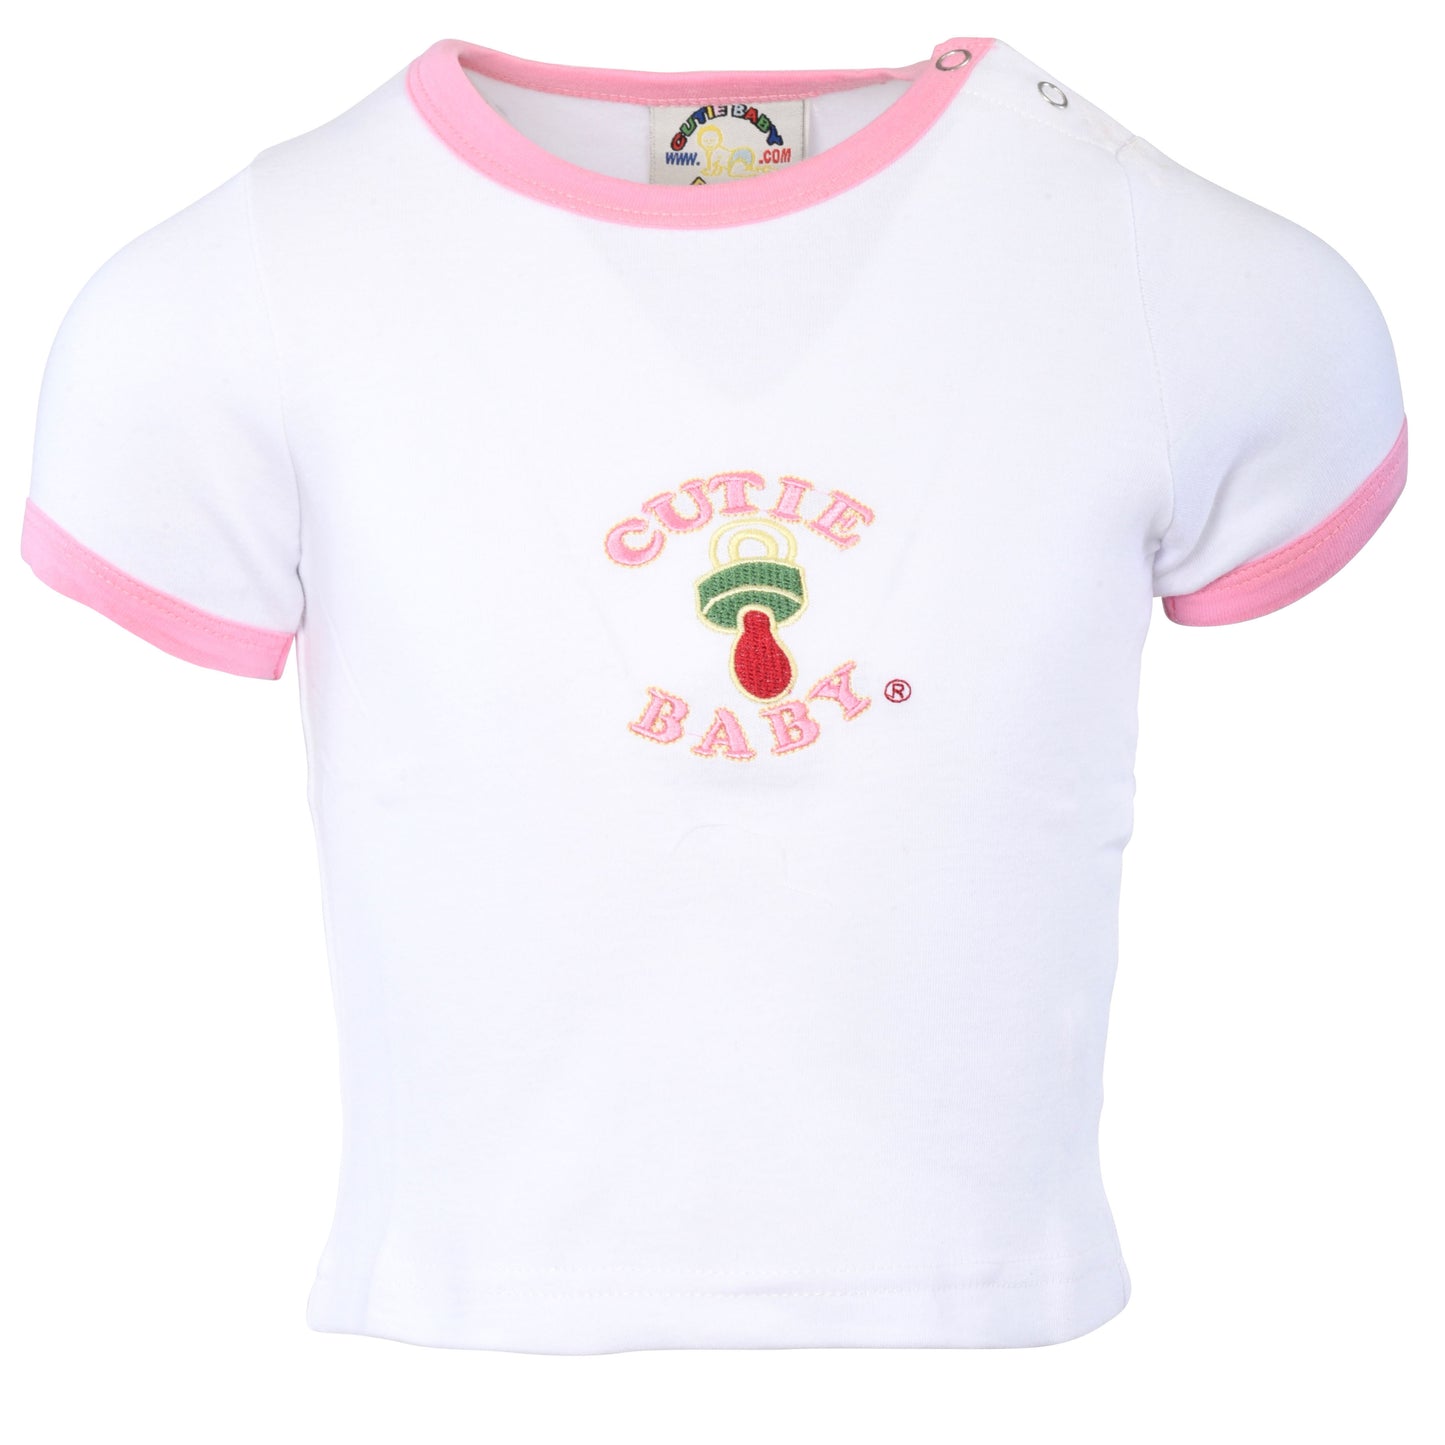 Egyptian Comb Cotton Diaper/T-shirt Combo - Pink